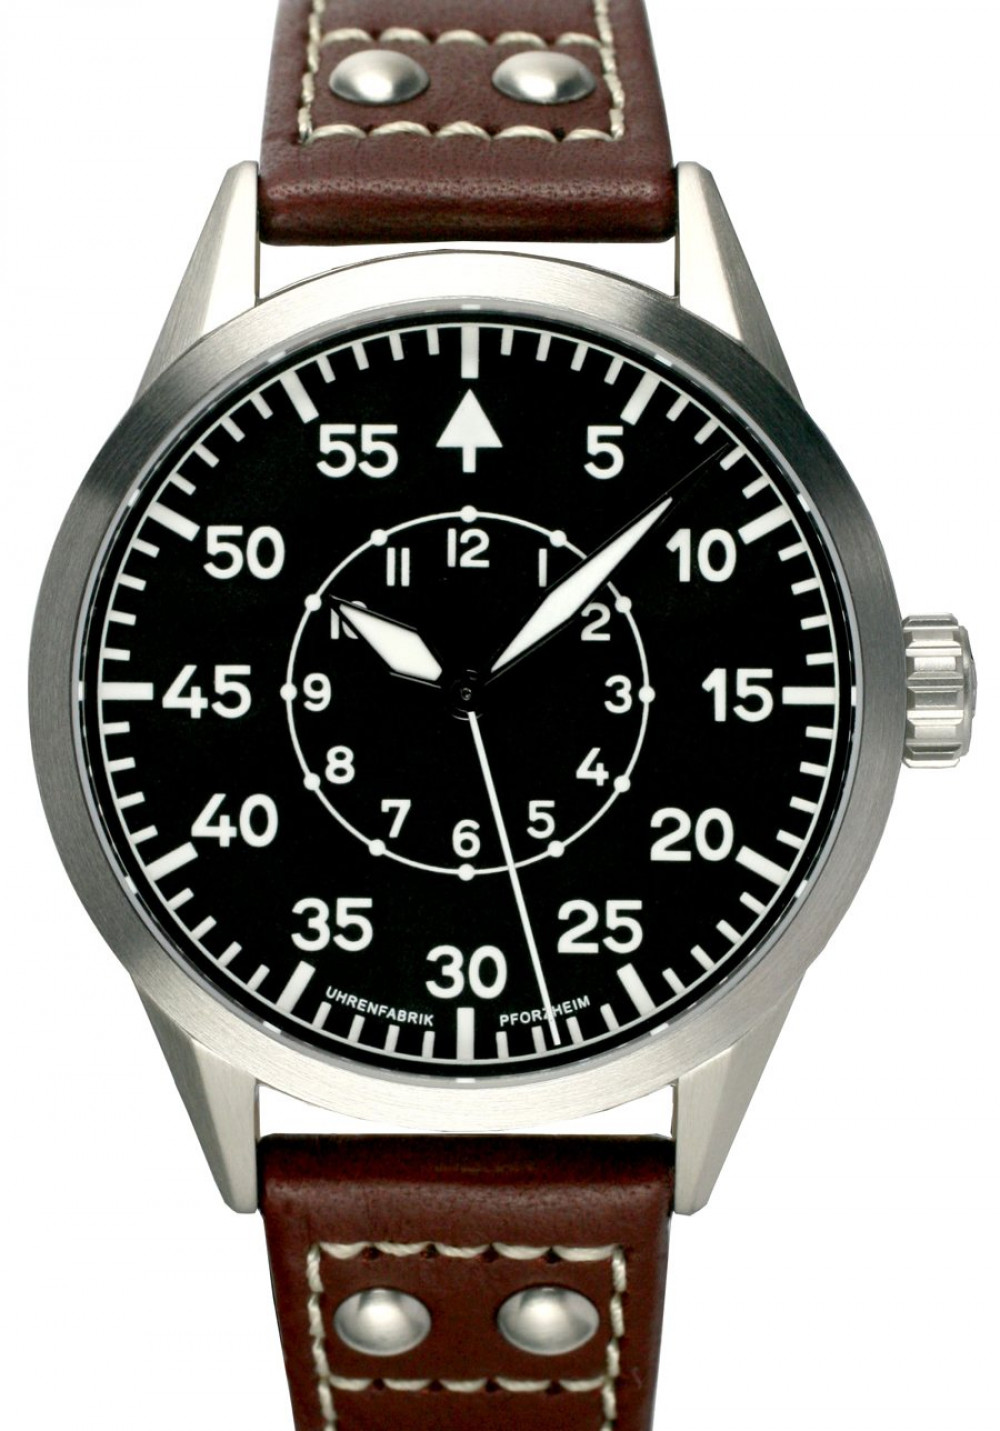 Zegarek firmy Autran & Viala, model Aviator B